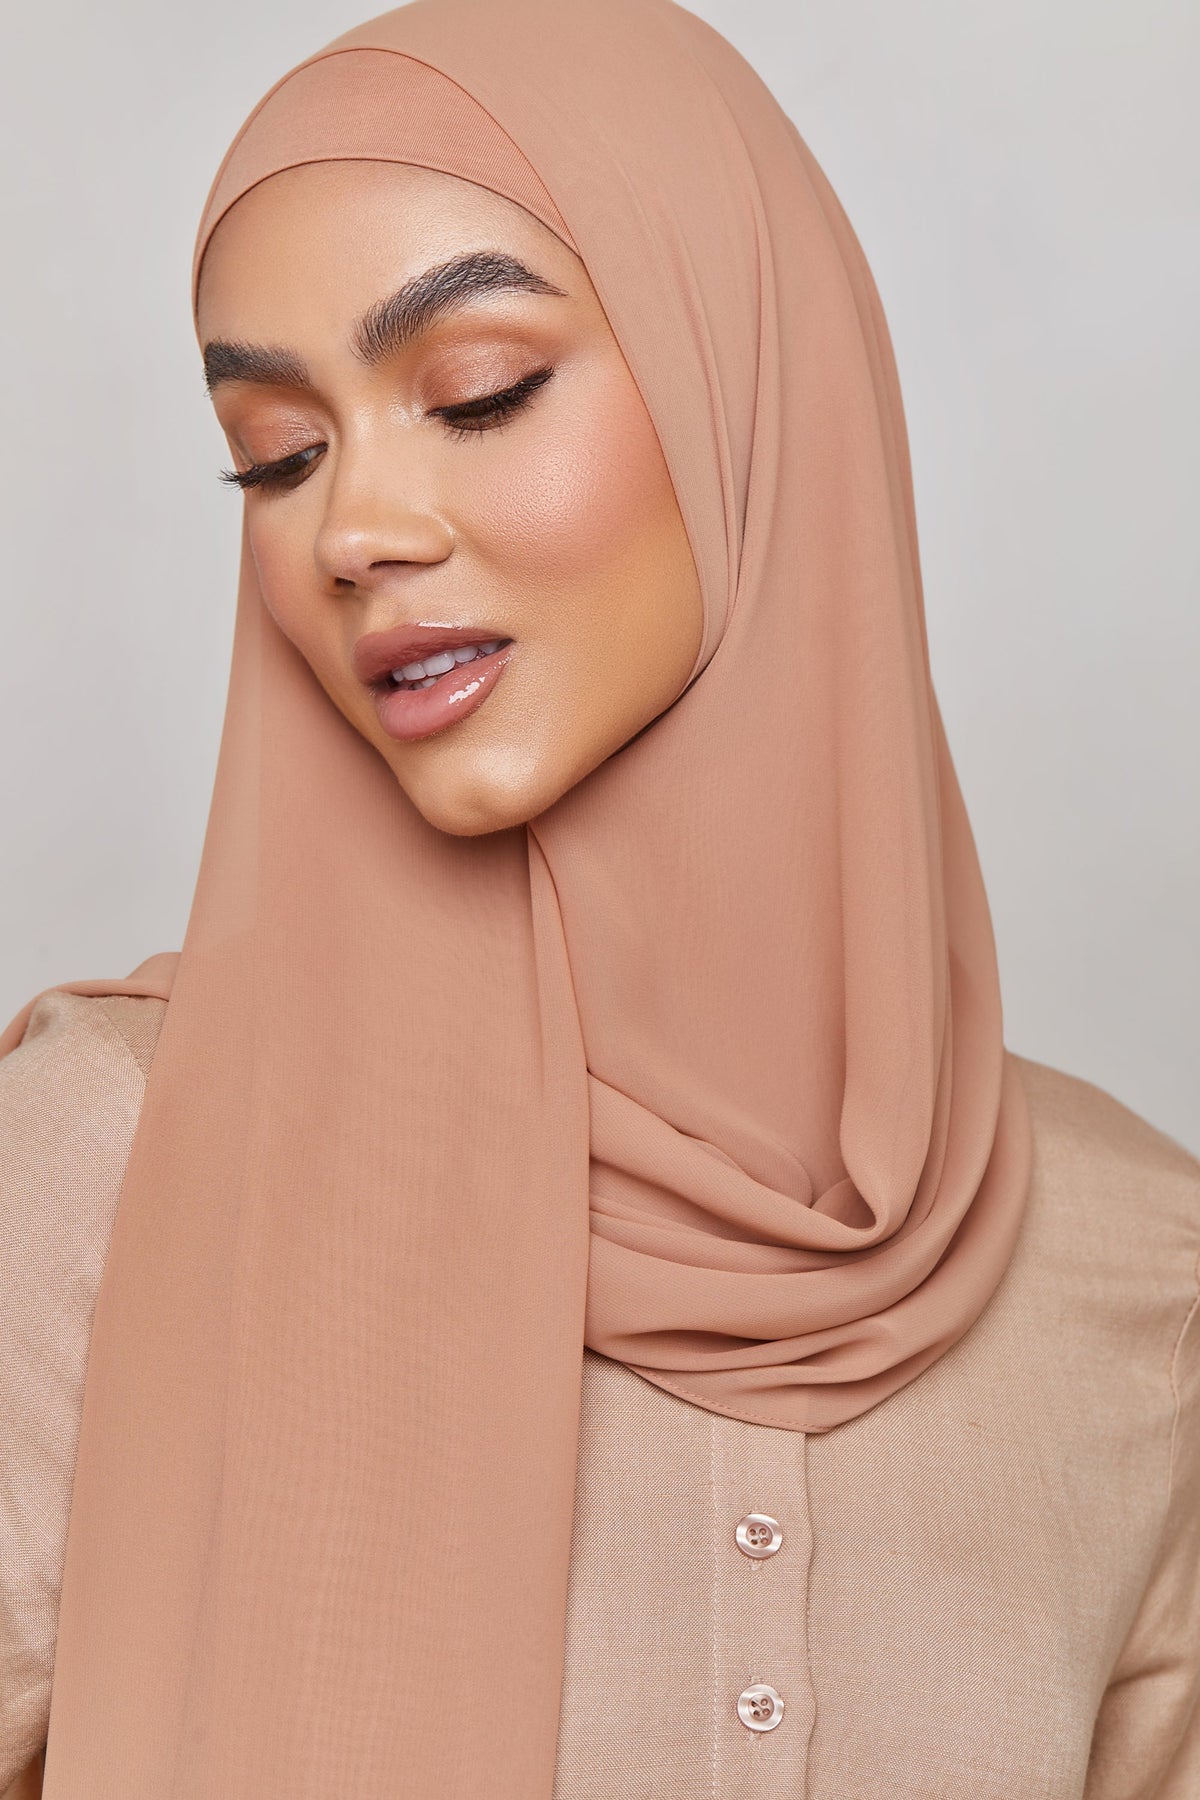 Chiffon LITE Hijab - Tawny Brown epschoolboard 